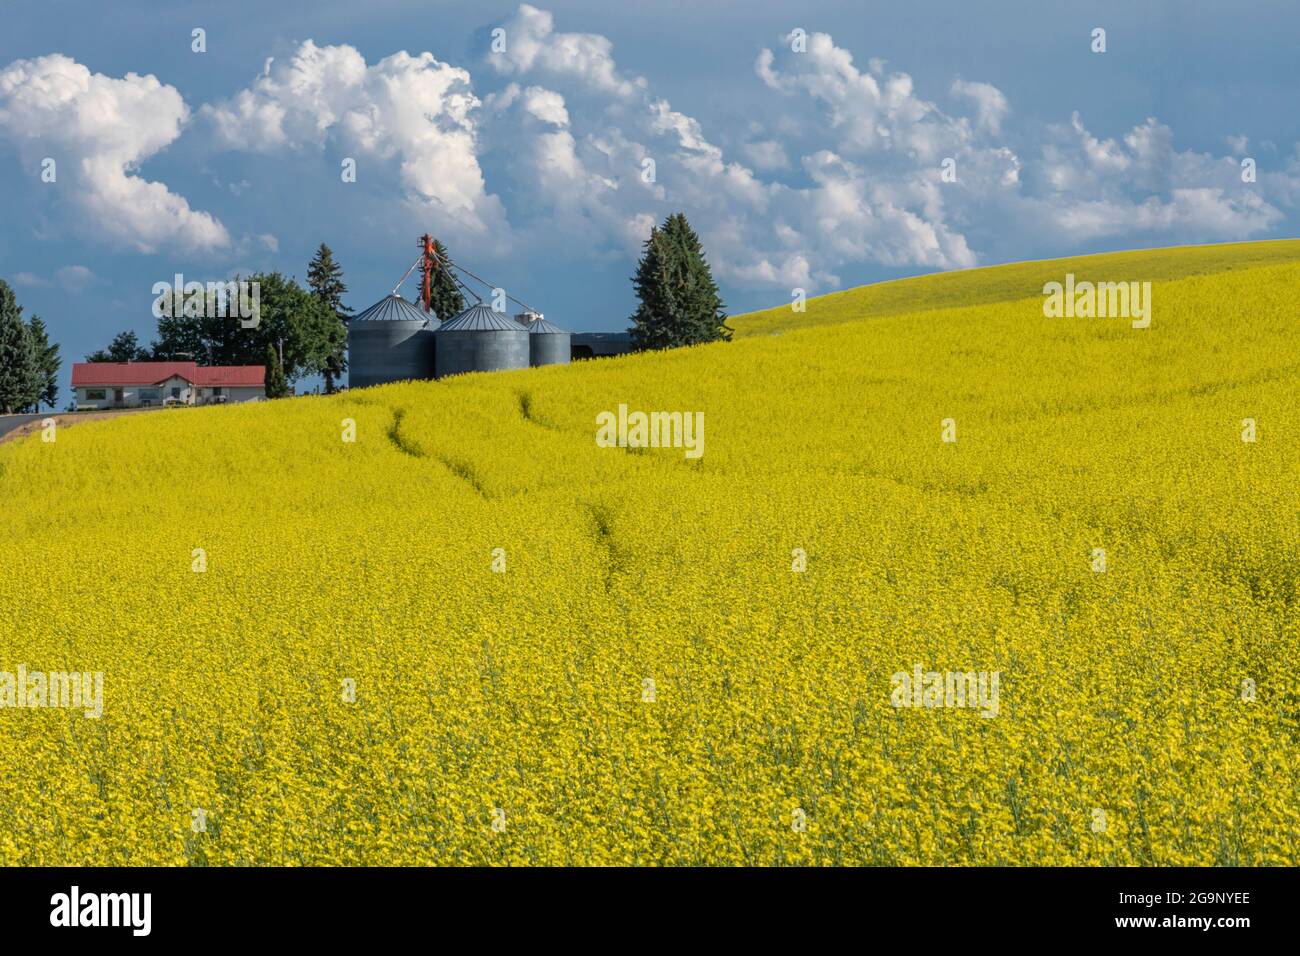 Farm house and Canola fields in Palouse region of Washington Stock Photo